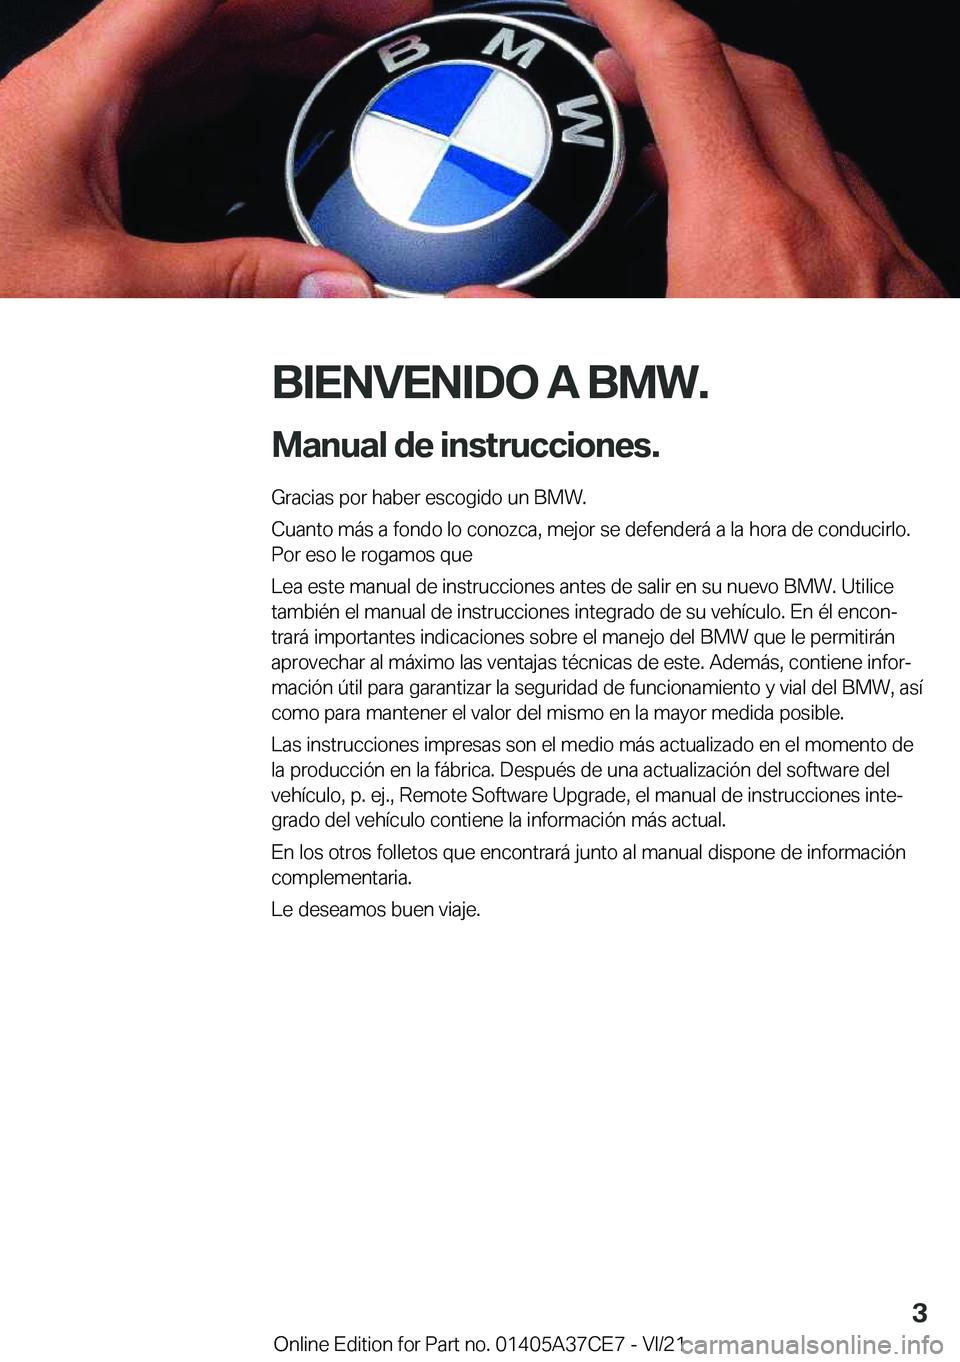 BMW X5 2022  Manuales de Empleo (in Spanish) �B�I�E�N�V�E�N�I�D�O��A��B�M�W�.
�M�a�n�u�a�l��d�e��i�n�s�t�r�u�c�c�i�o�n�e�s�. �G�r�a�c�i�a�s��p�o�r��h�a�b�e�r��e�s�c�o�g�i�d�o��u�n��B�M�W�.
�C�u�a�n�t�o��m�